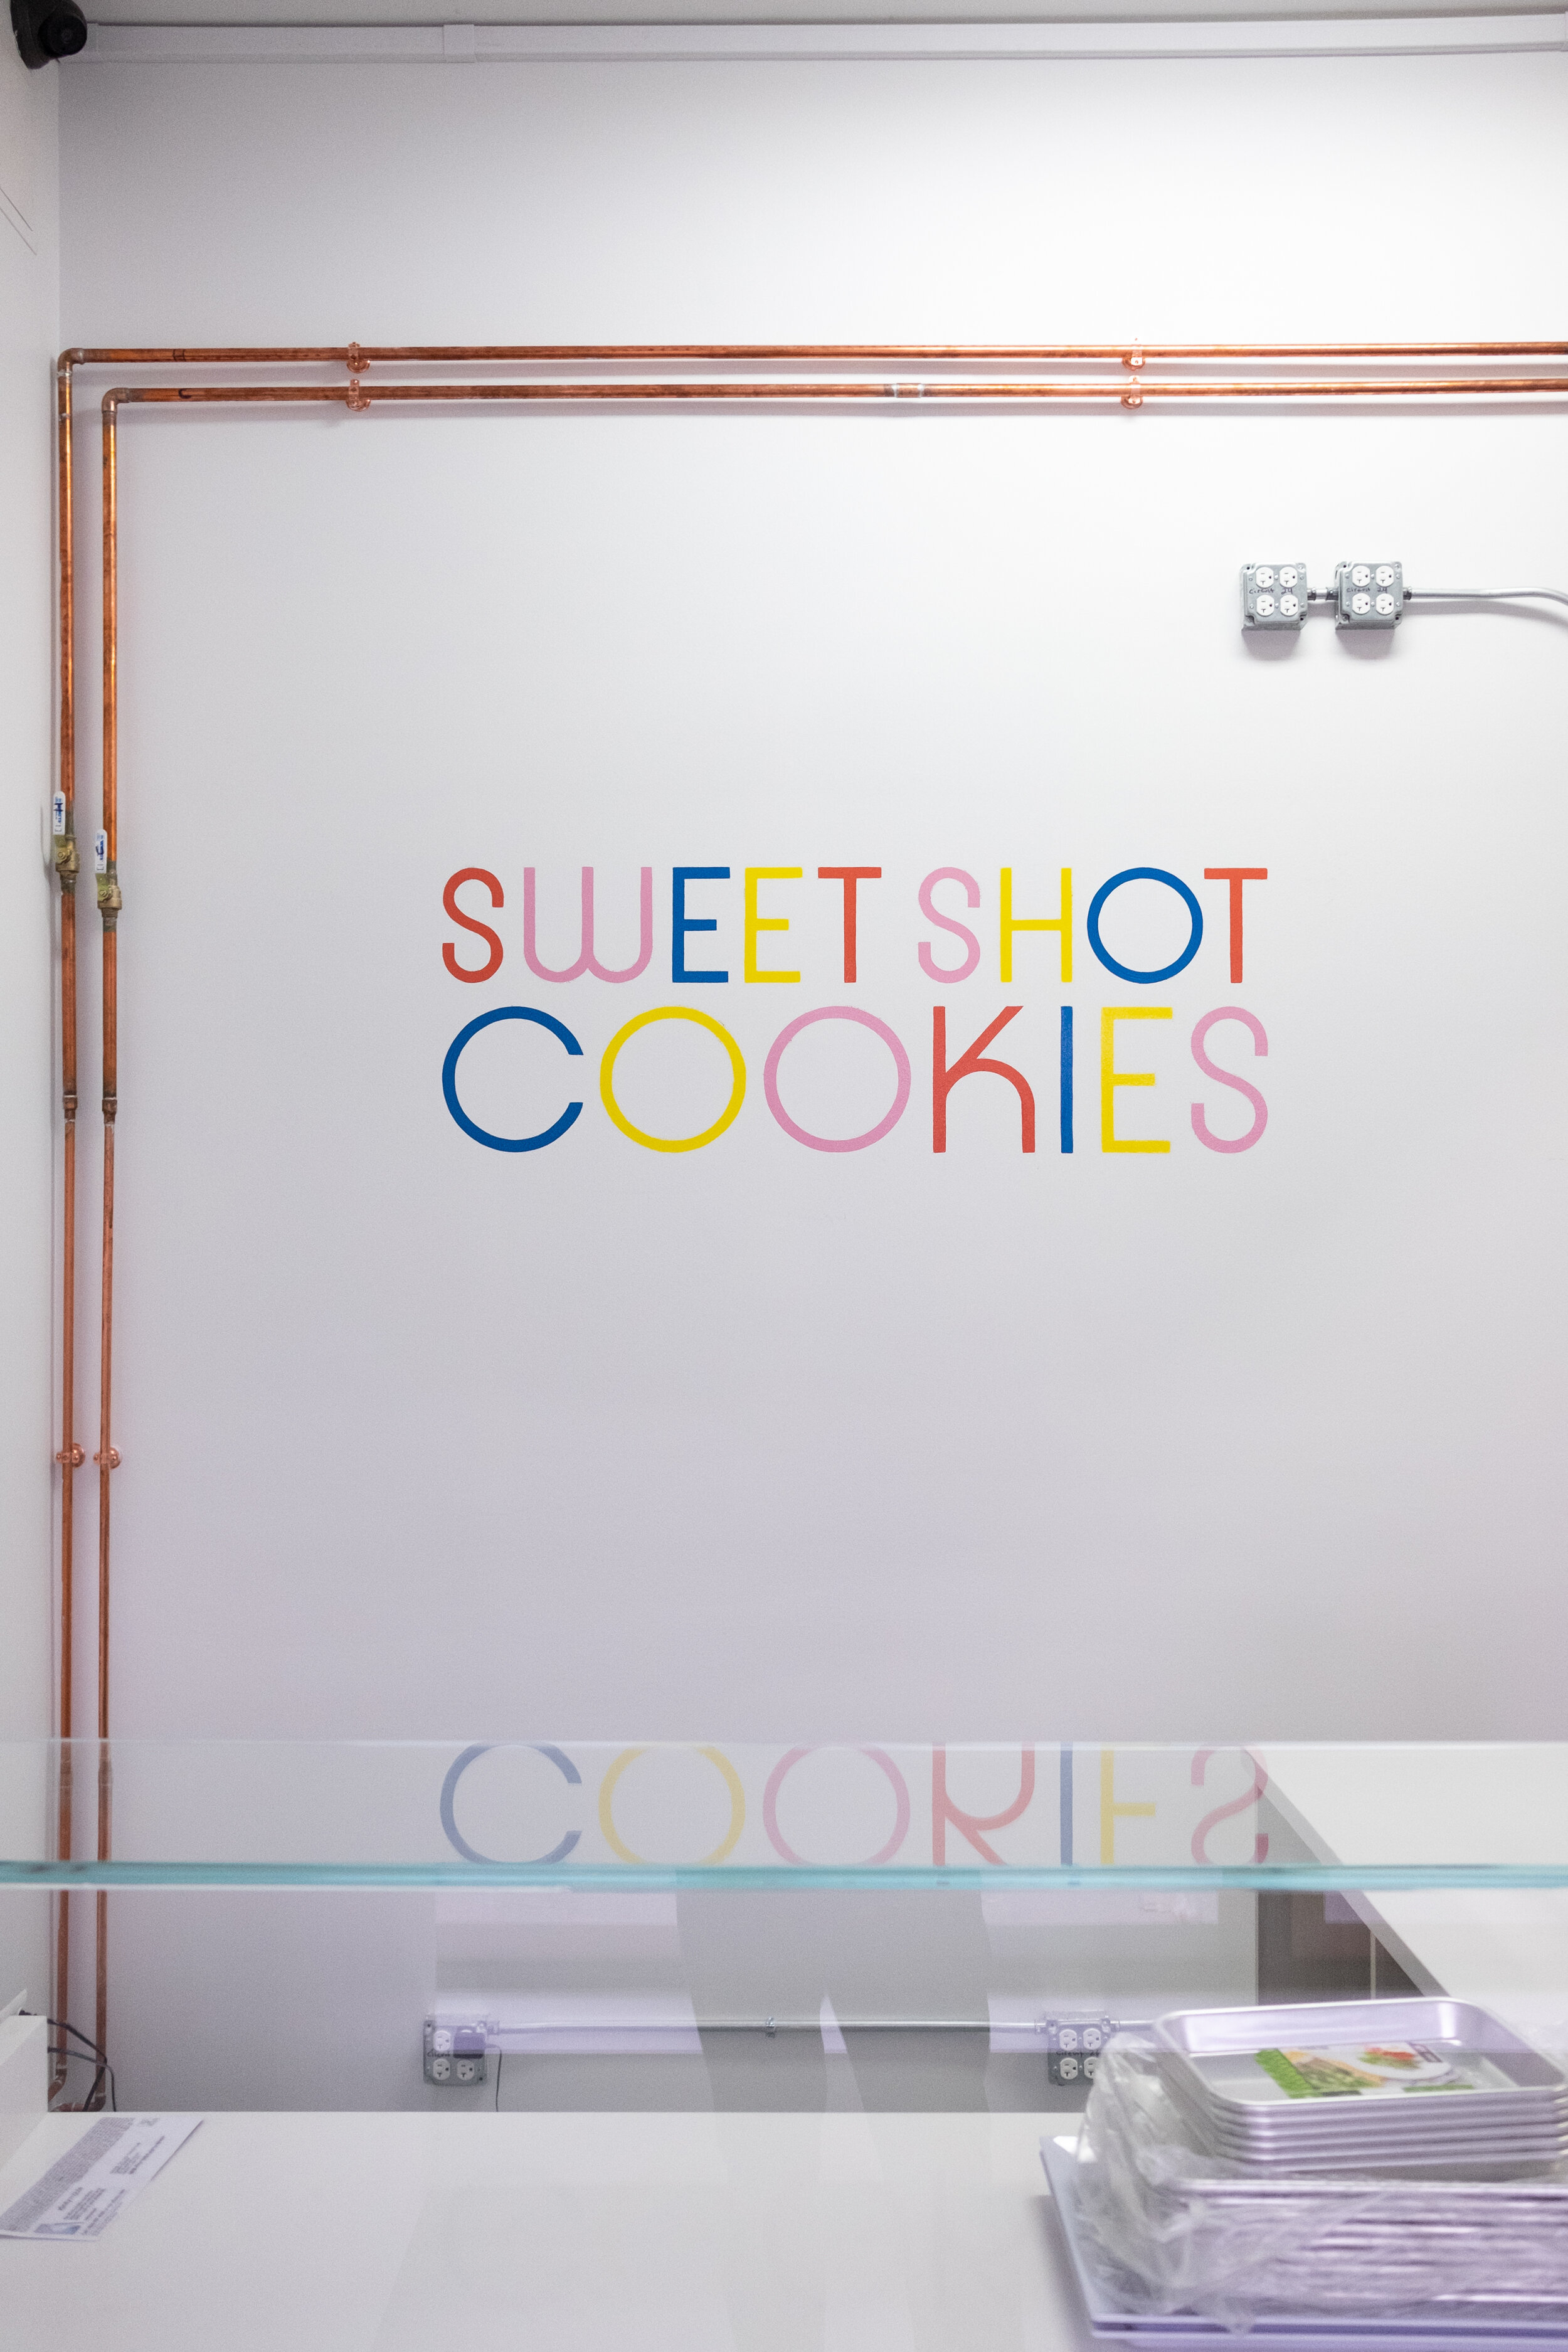 Sweet Shot Cookies